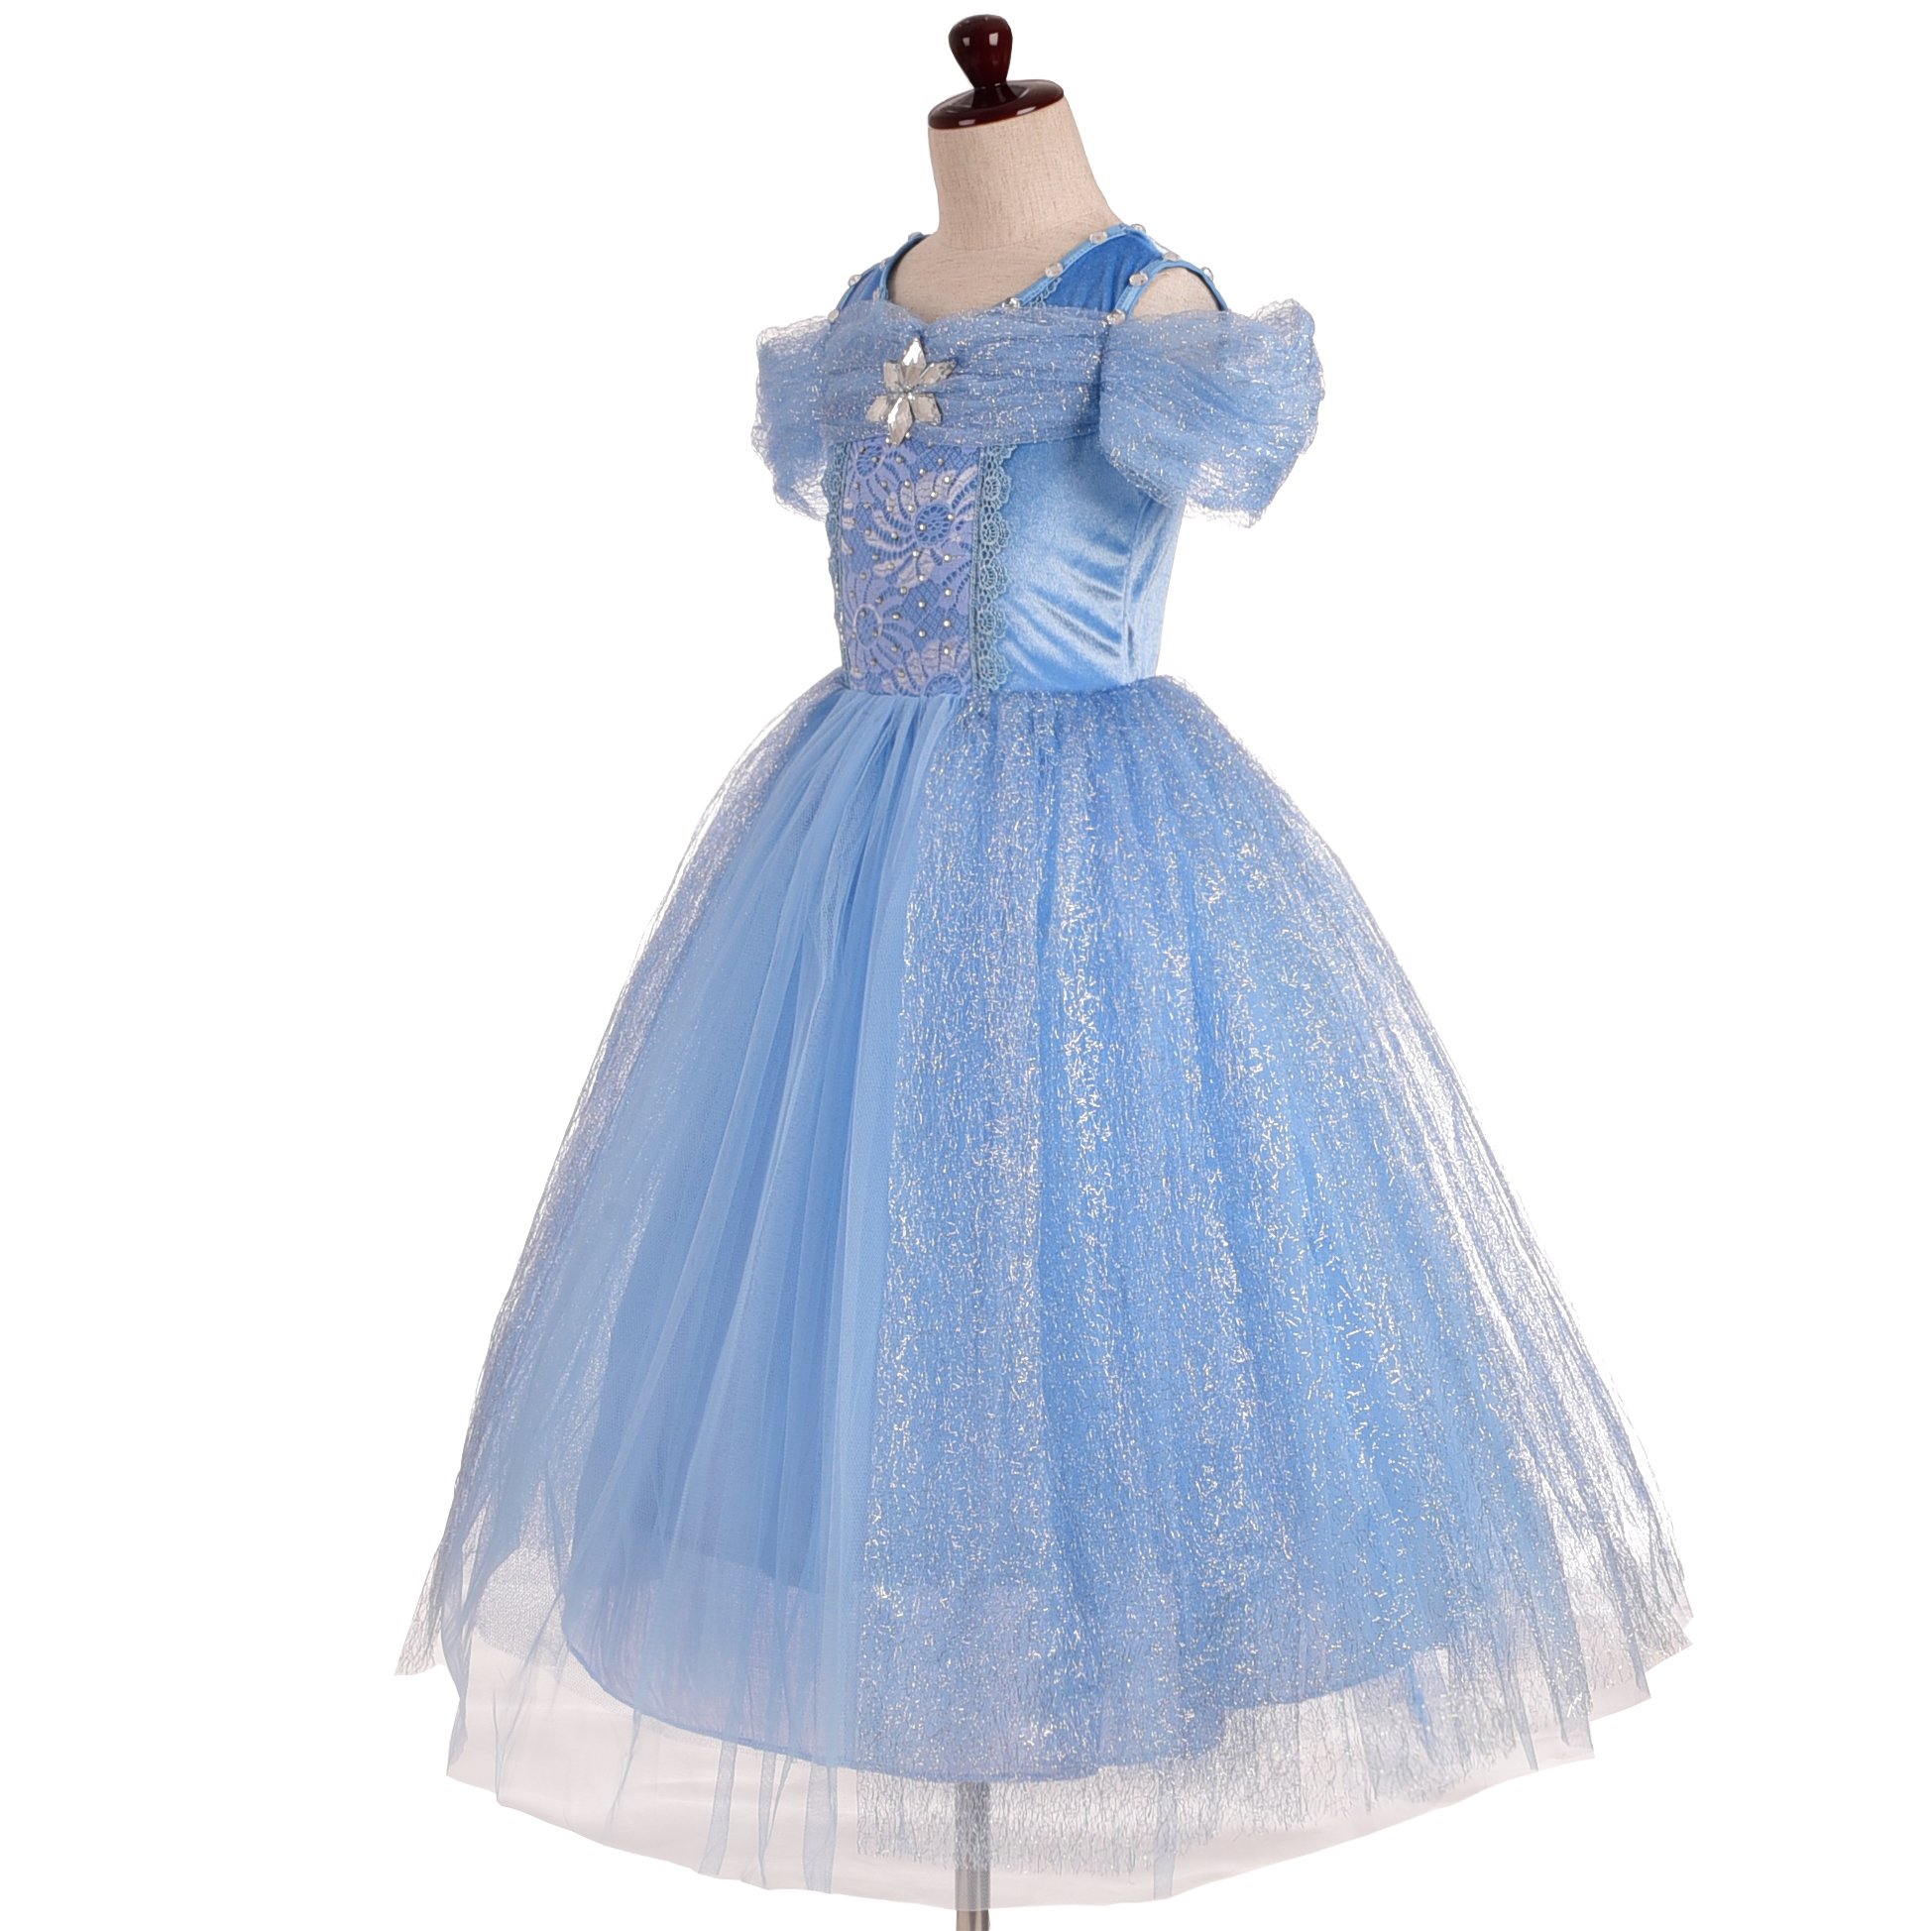 Dressy Daisy Girls' Princess Dress Costume Christmas Halloween Fancy Dresses Up Butterfly Size 5-6 Blue